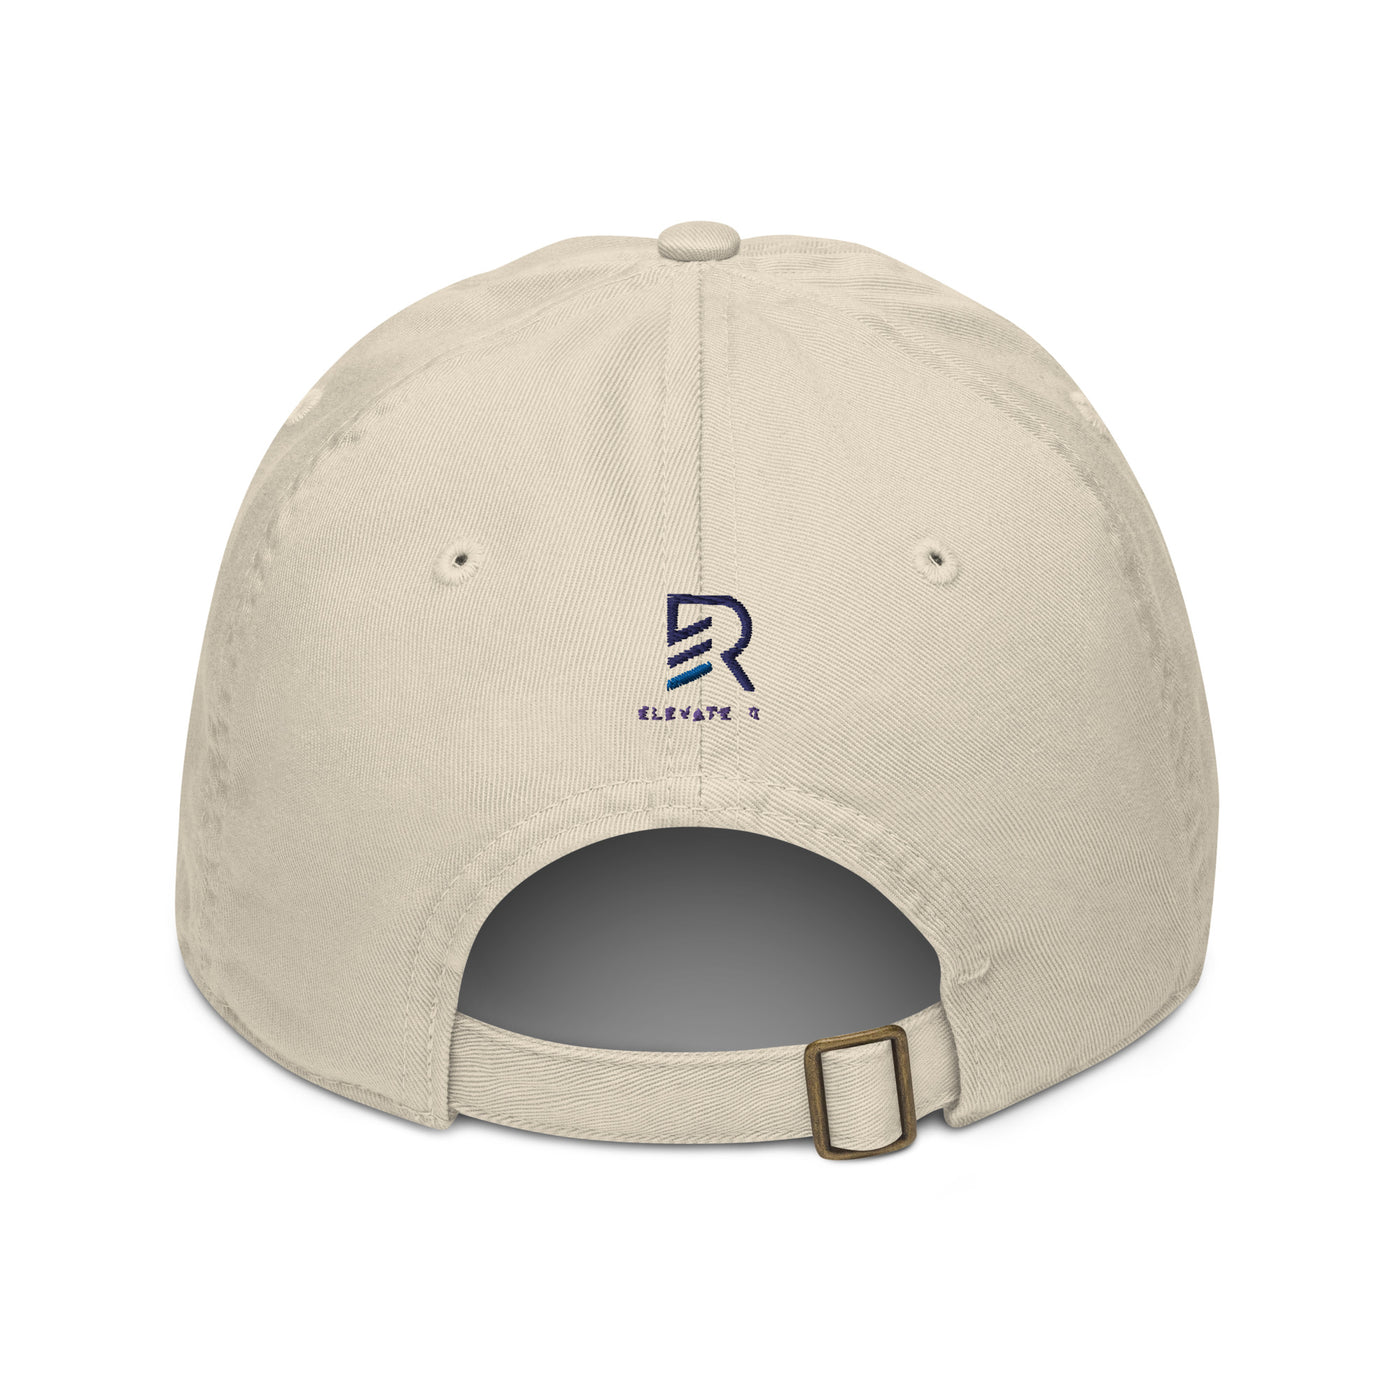 Organic Oyster Baseball Cap - Focus